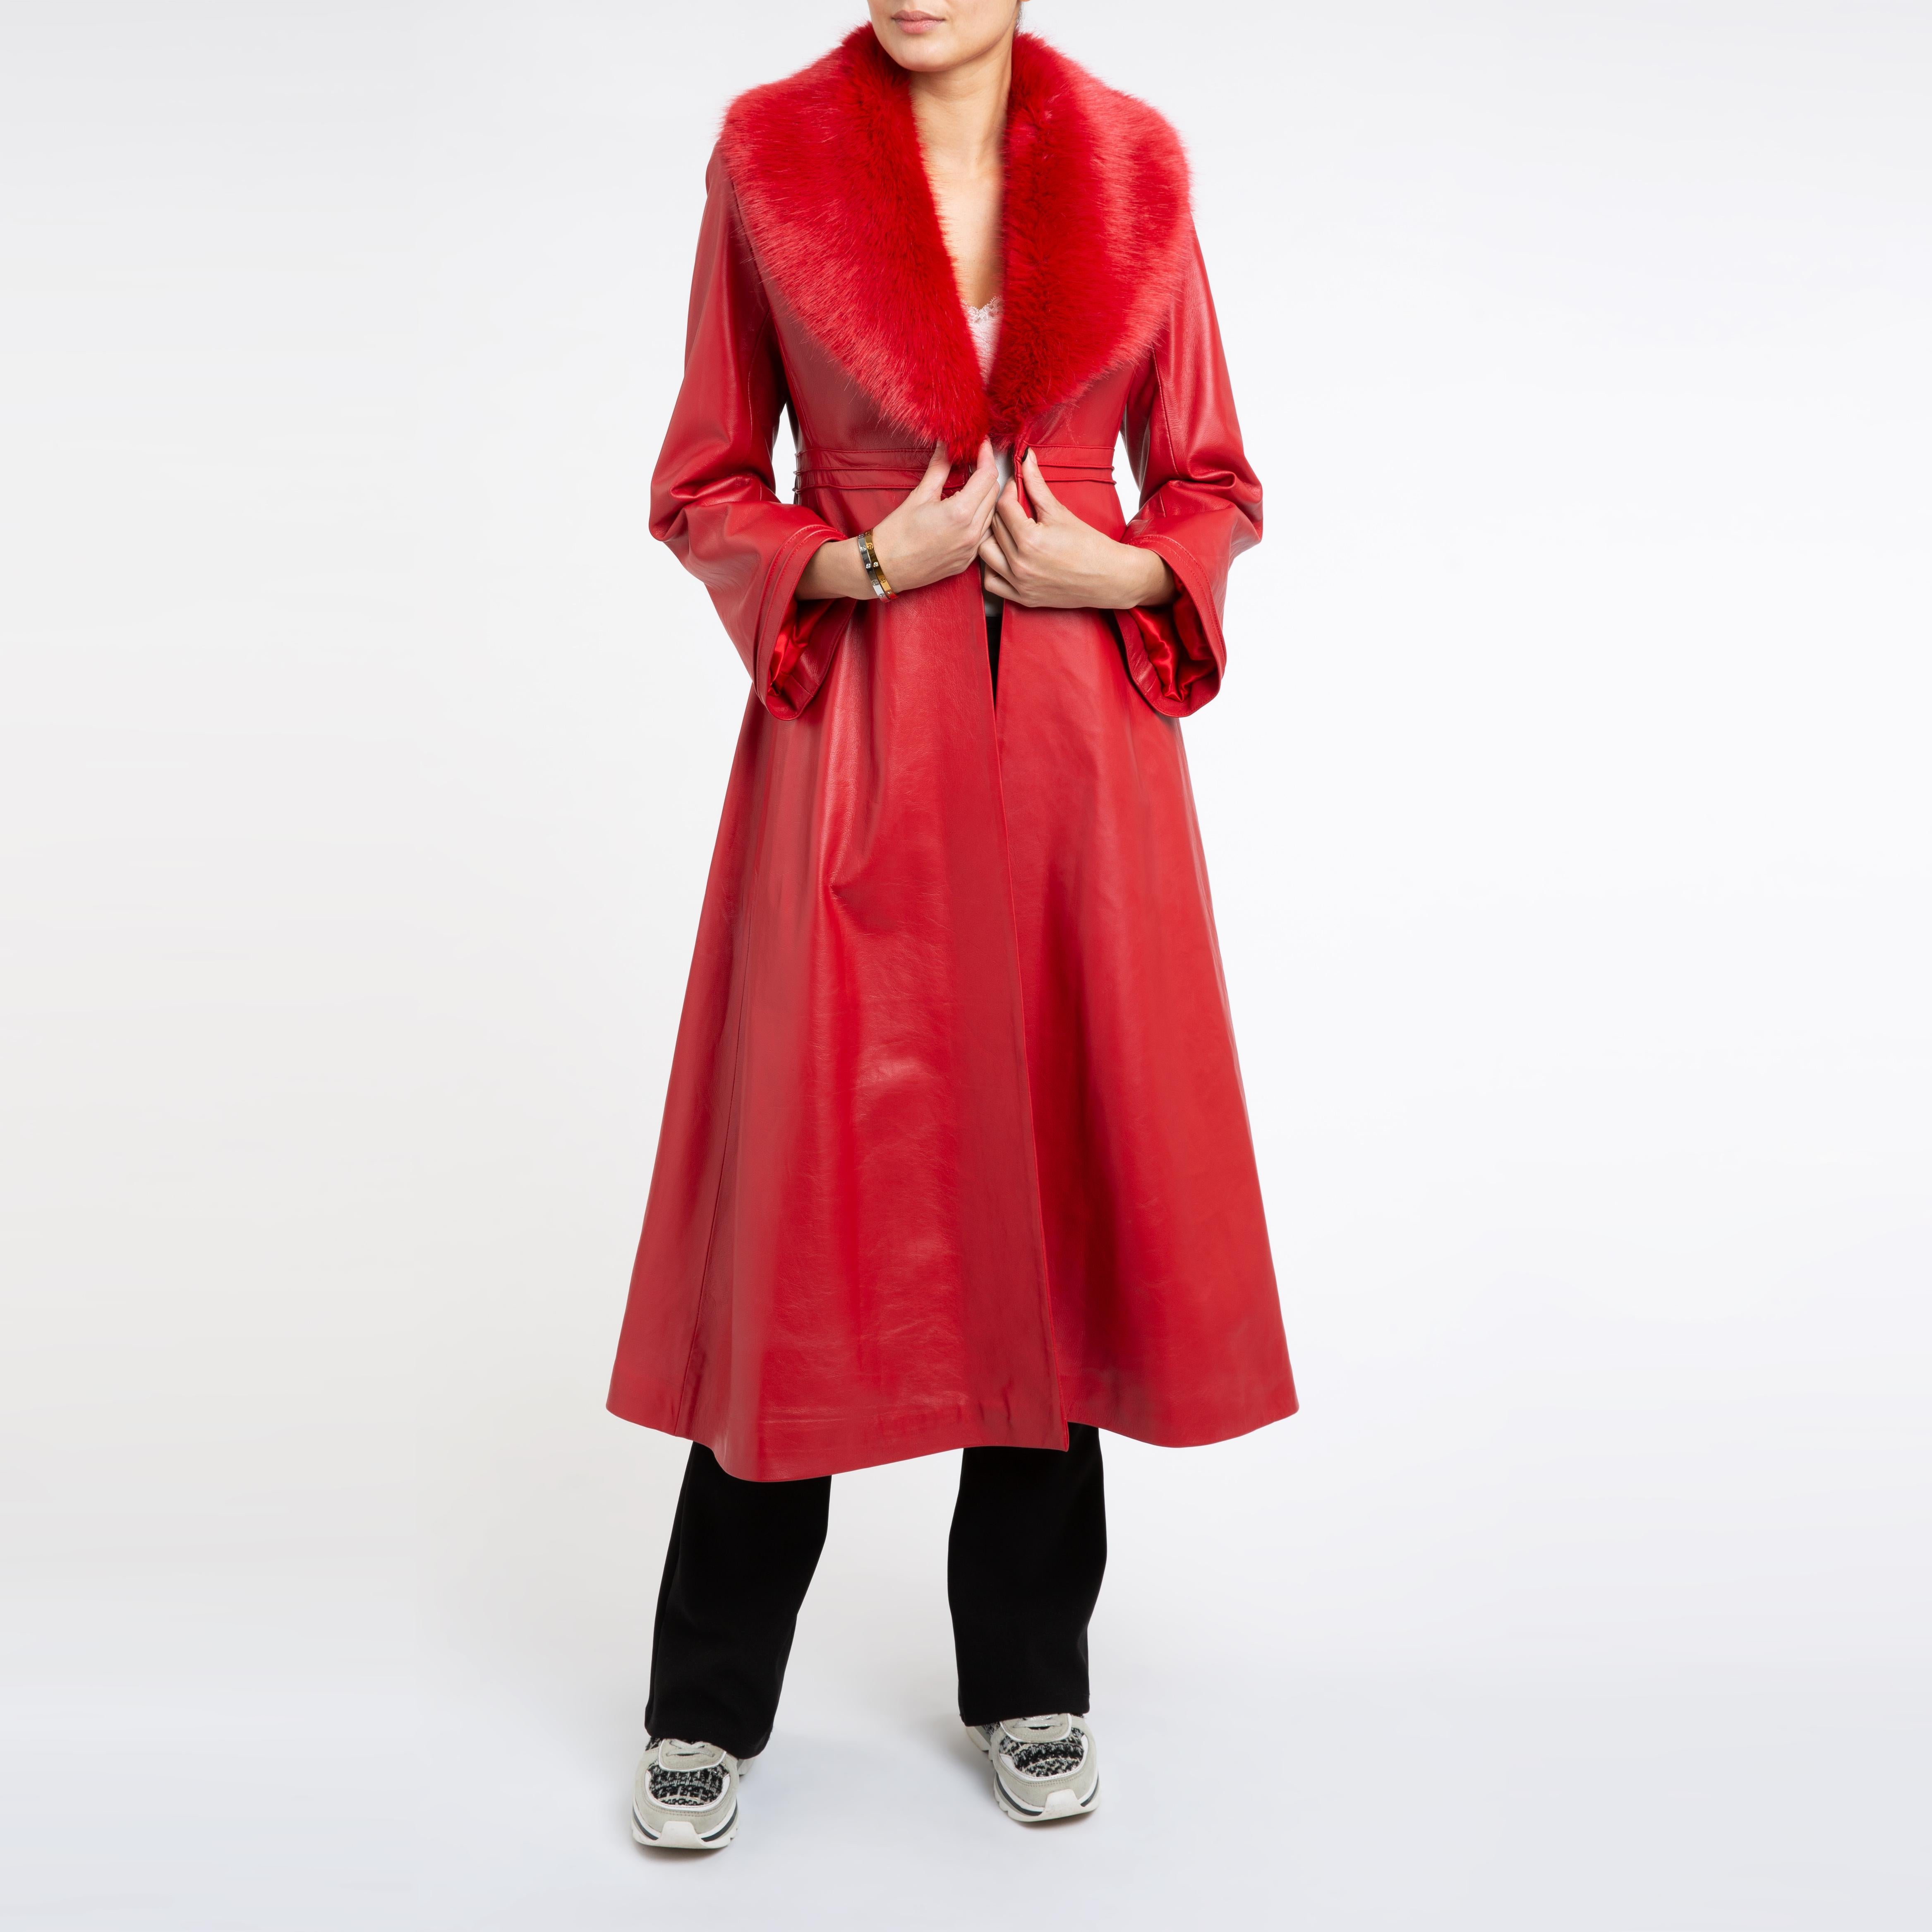 Verheyen London Edward Leather Coat with Faux Fur Collar in Red - Size uk 12 8